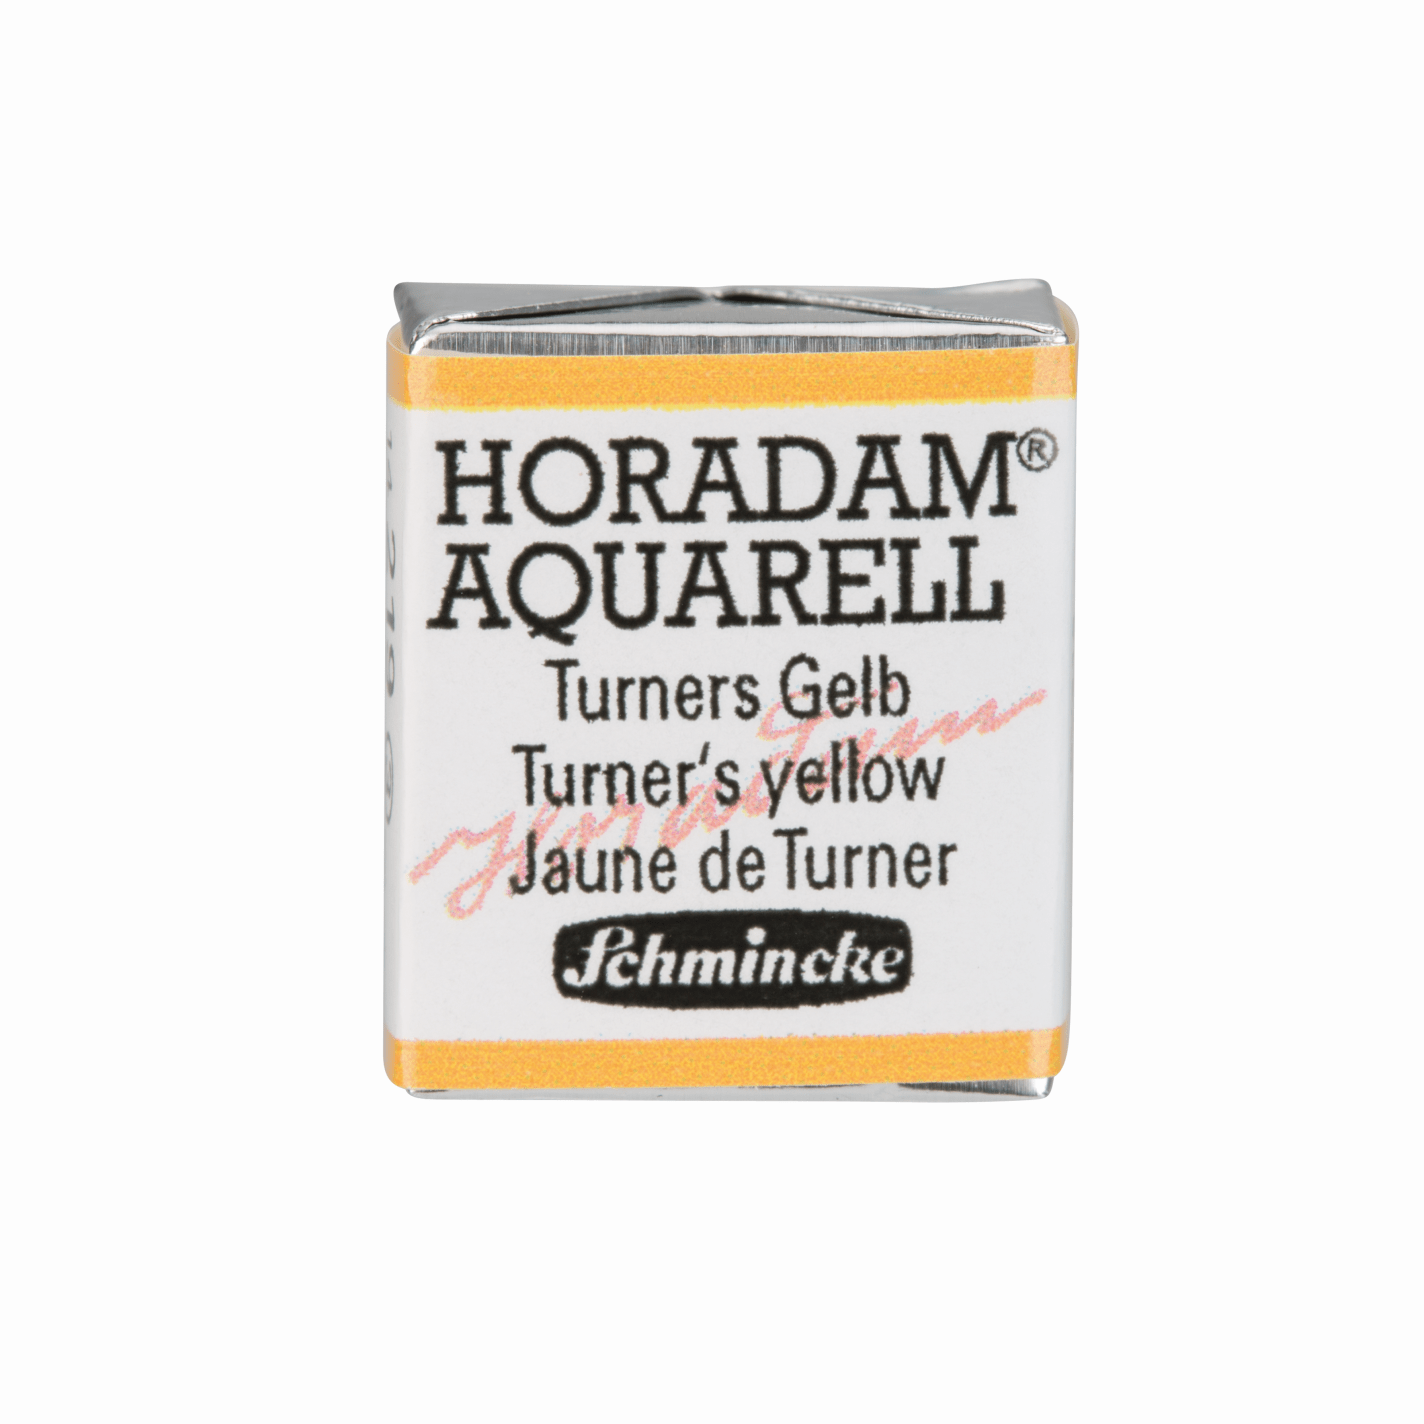 Schmincke Horadam Aquarell pans 1/2 pan Turner‘s Yellow